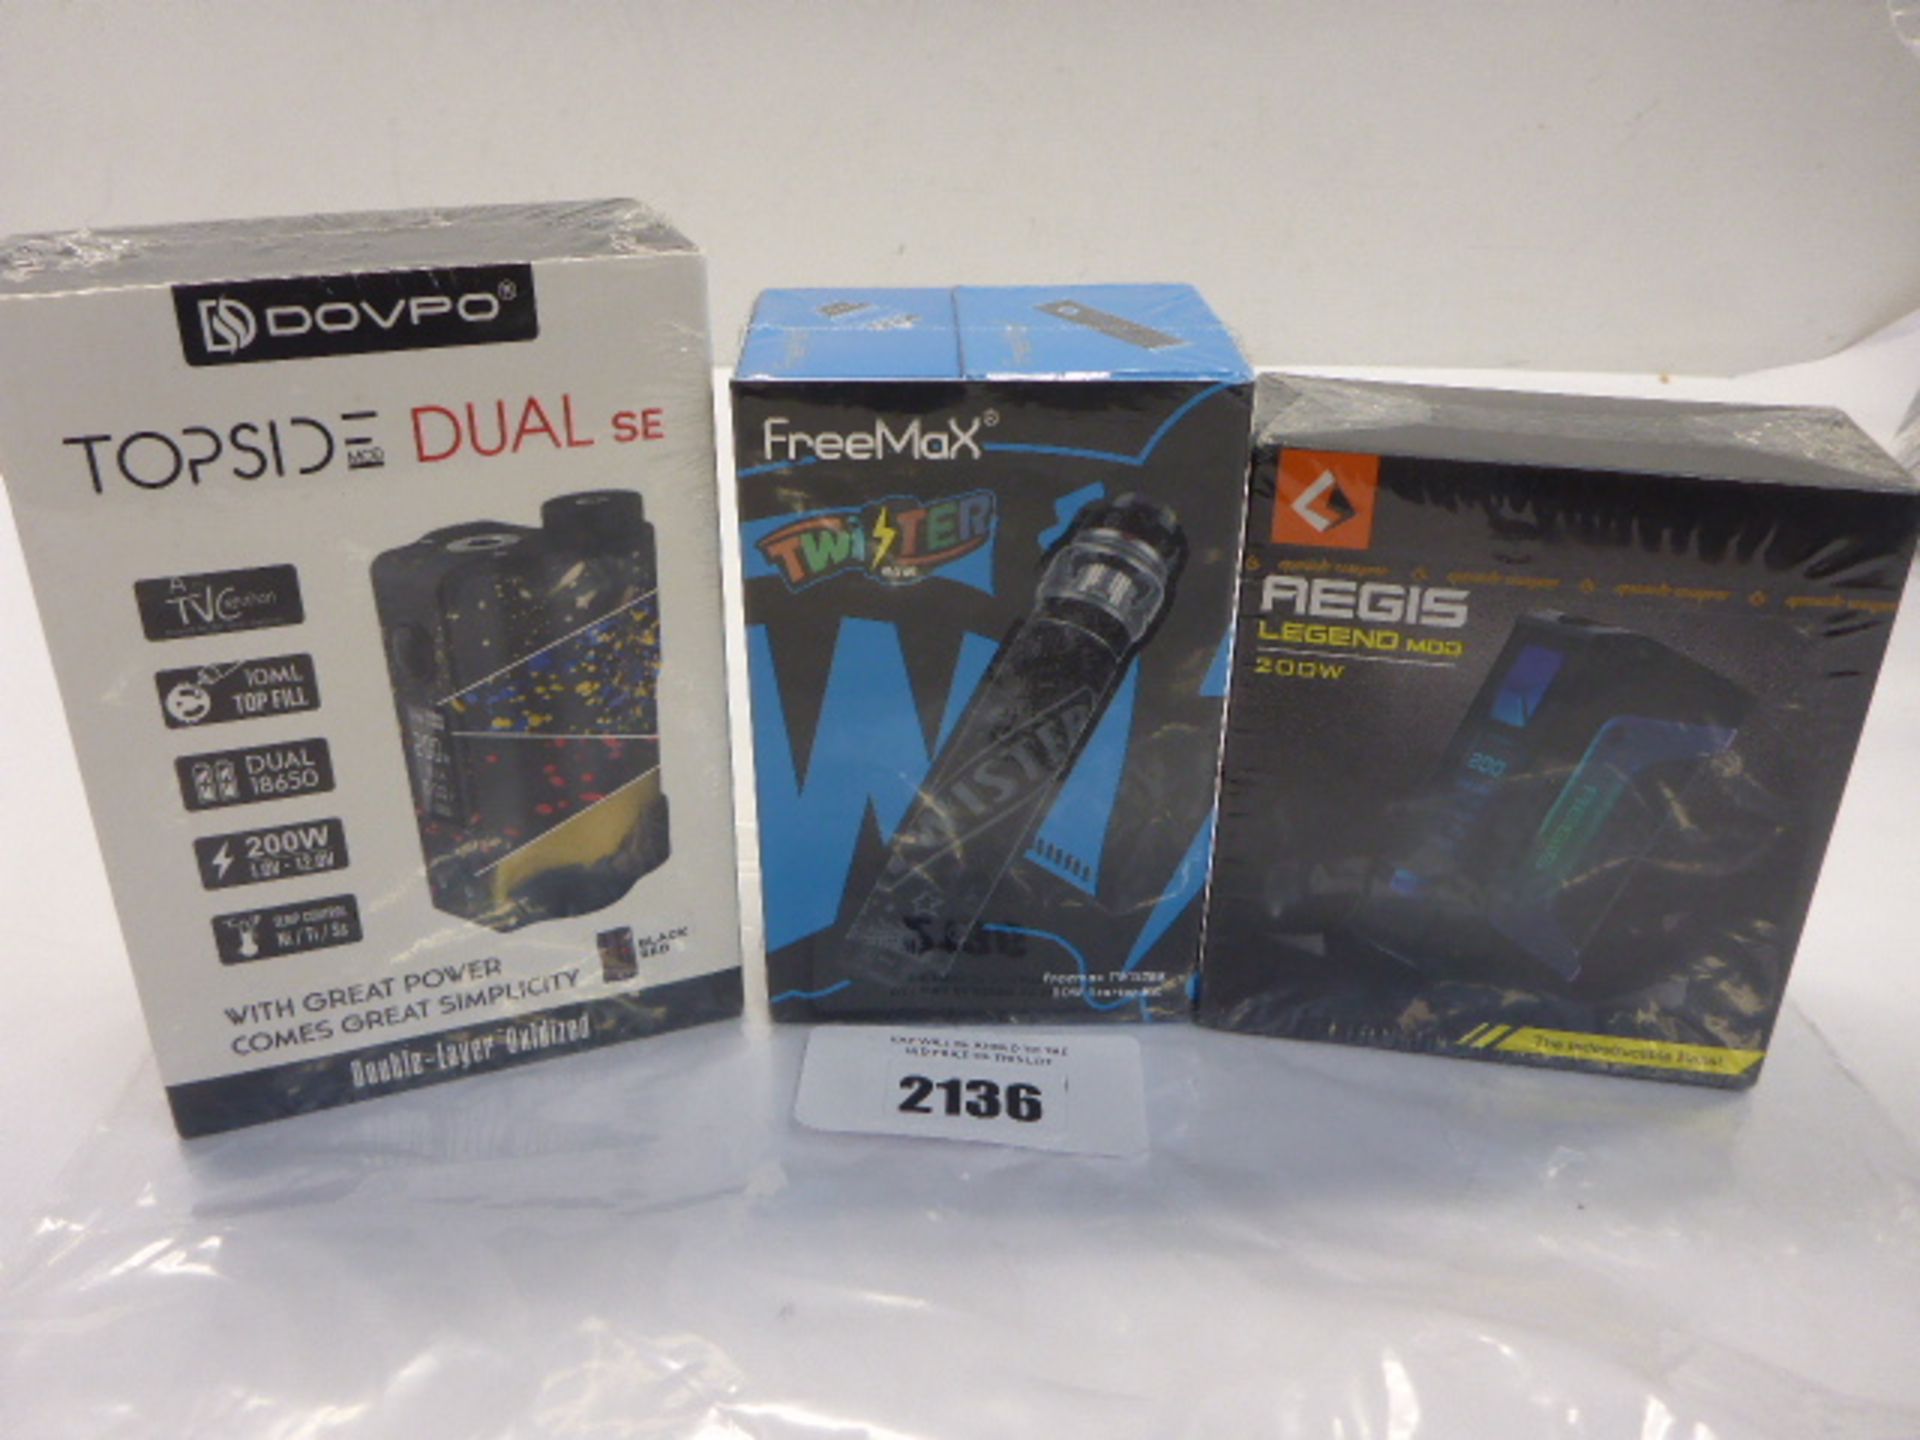 3x vaping kits; Topside Dual SE, Aegis Legend Mod and Freemax Twister